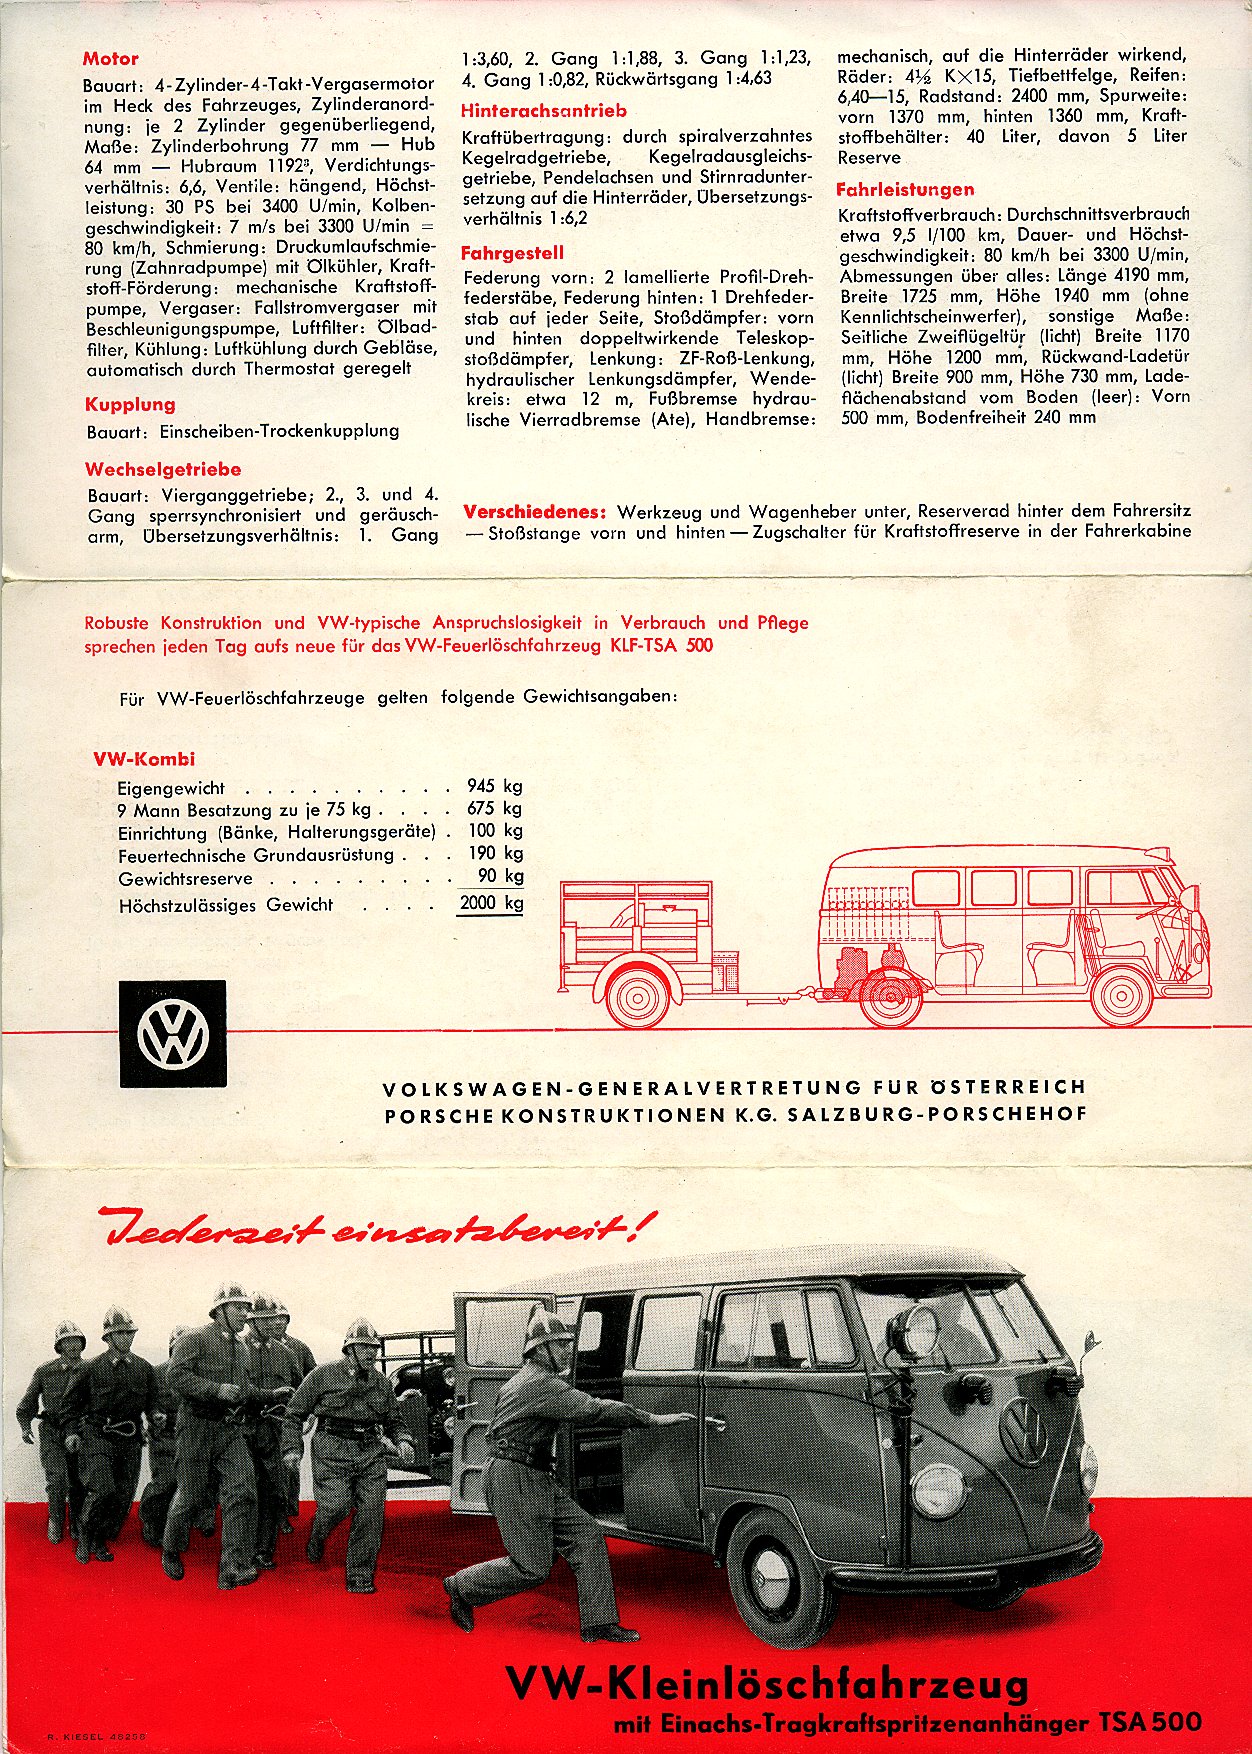 TheSamba.com :: VW Archives - 1957 VW Bus Fire Vehicle Kombi - German